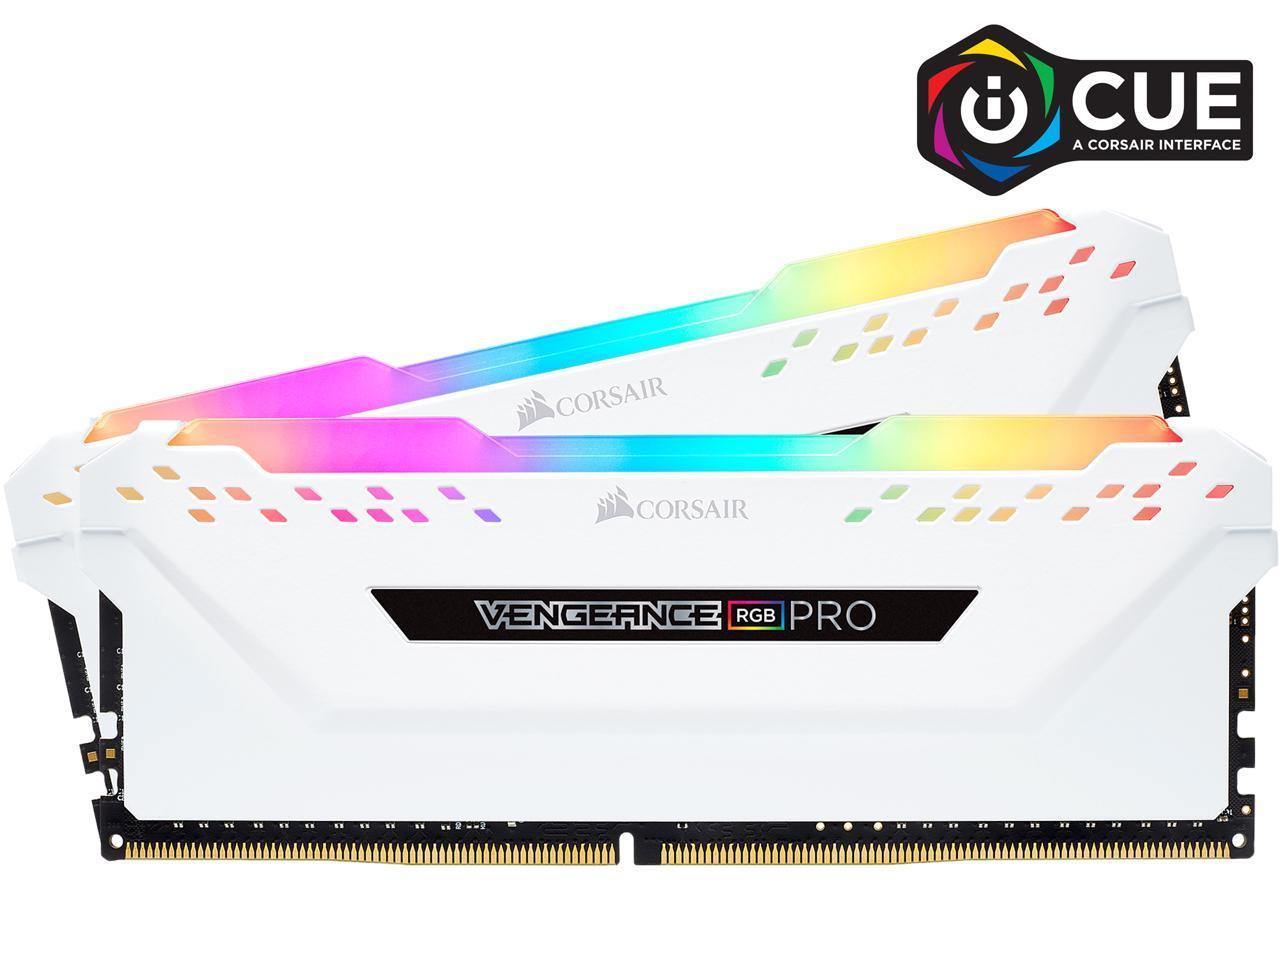 32GB Corsair Vengeance RGB Pro DDR4 3200 Desktop Memory for $129.99 Shipped